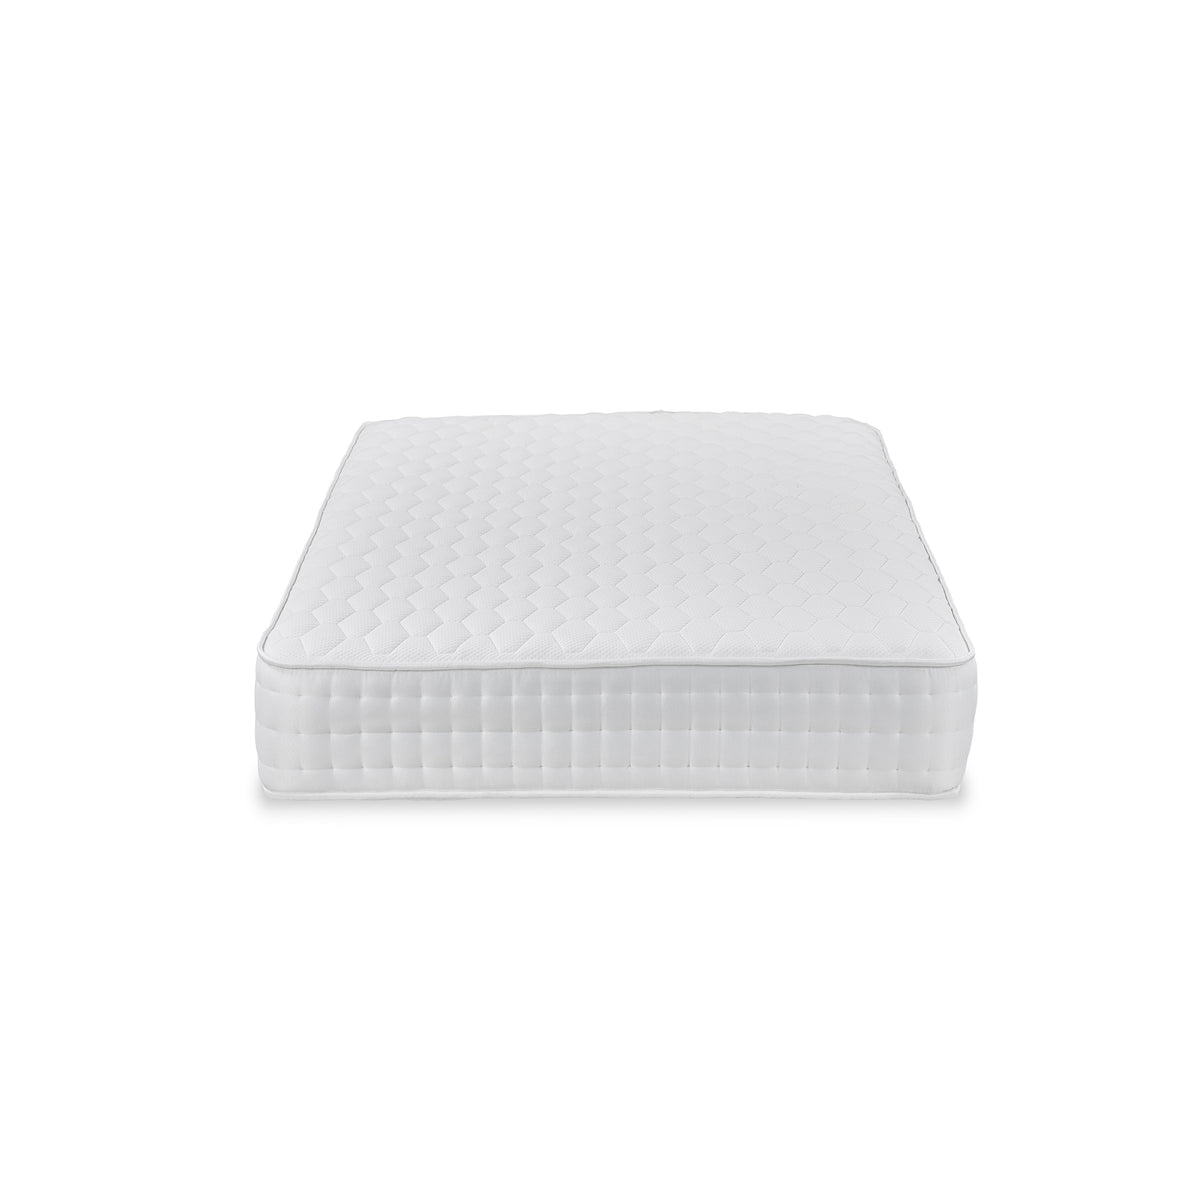 Roseland Sleep Classic Pocket Sprung Memory Foam Quilted Mattress 4ft6 double